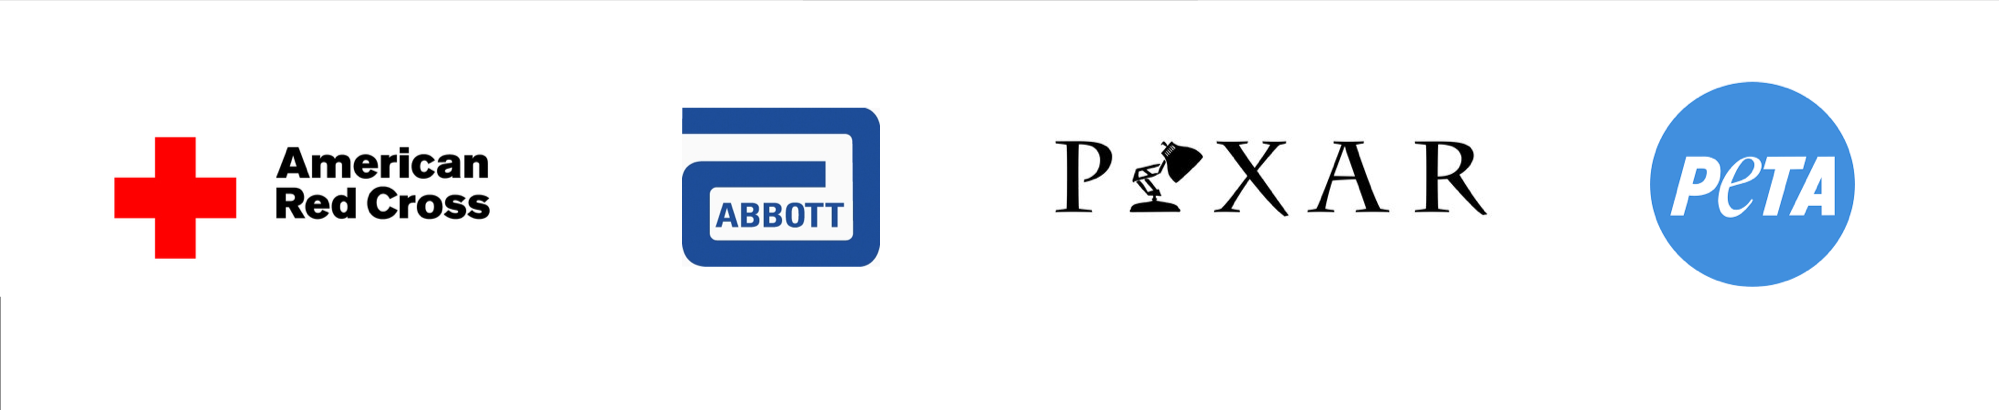 Red Cross, Abbott, Pixar and Peta logos